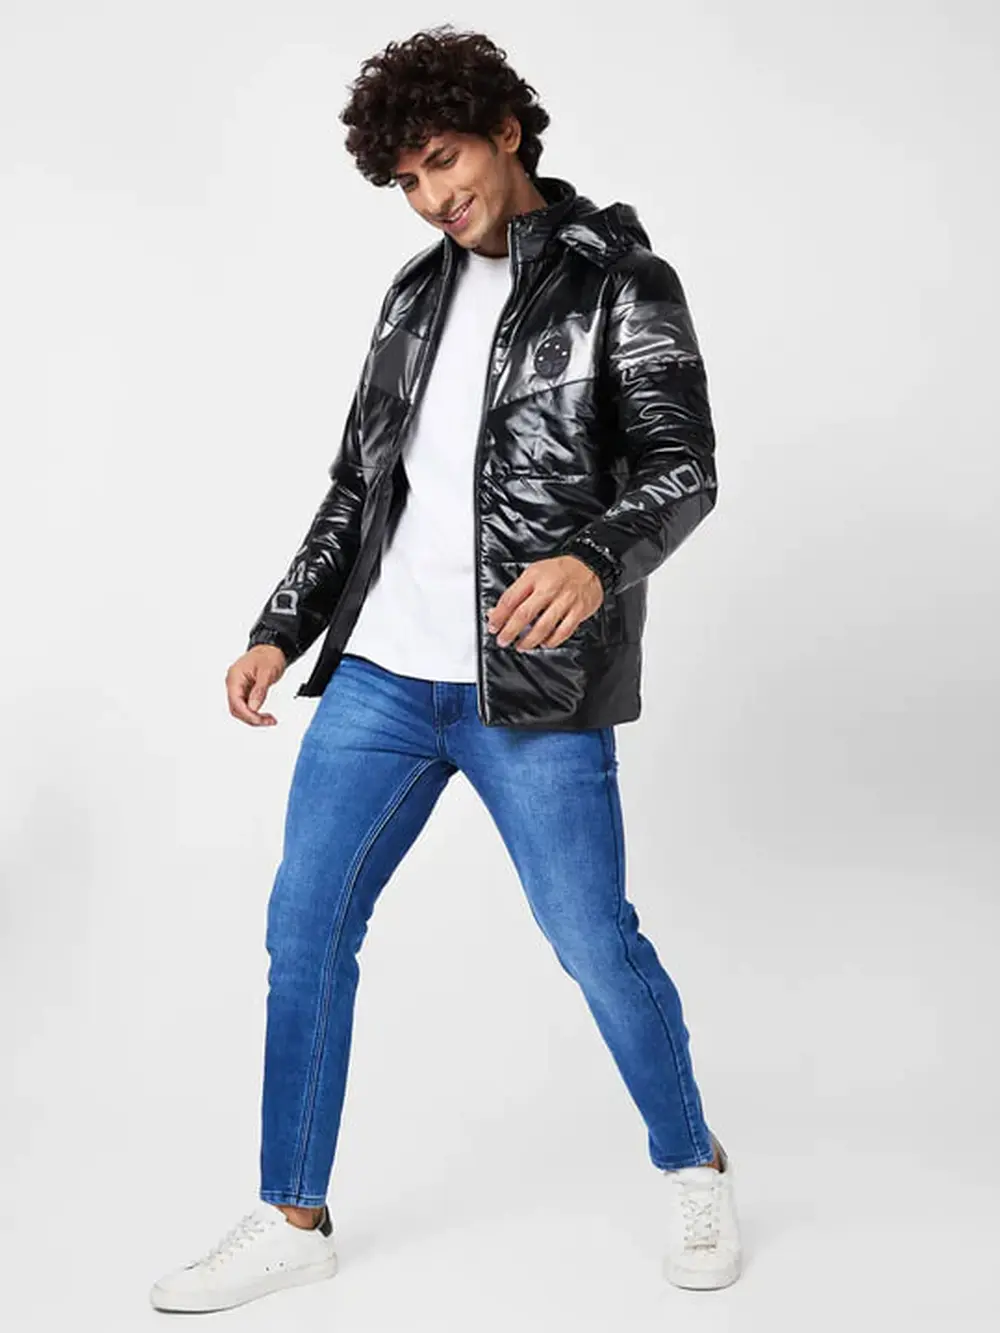 Men'S Metallic Look Jacket With Flash Reflective Print